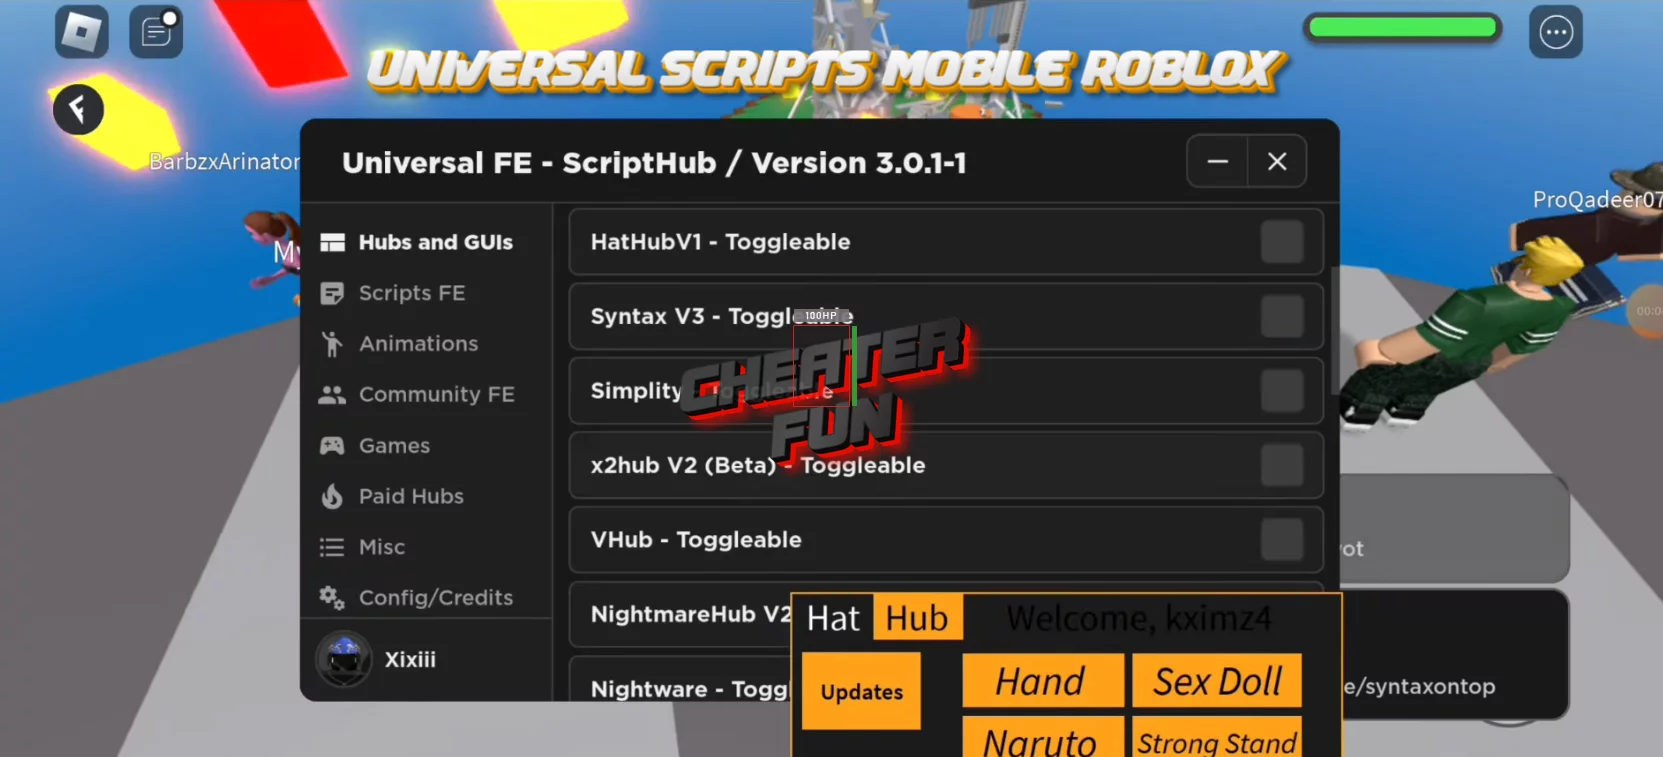 Universal Scripts Mobile Roblox